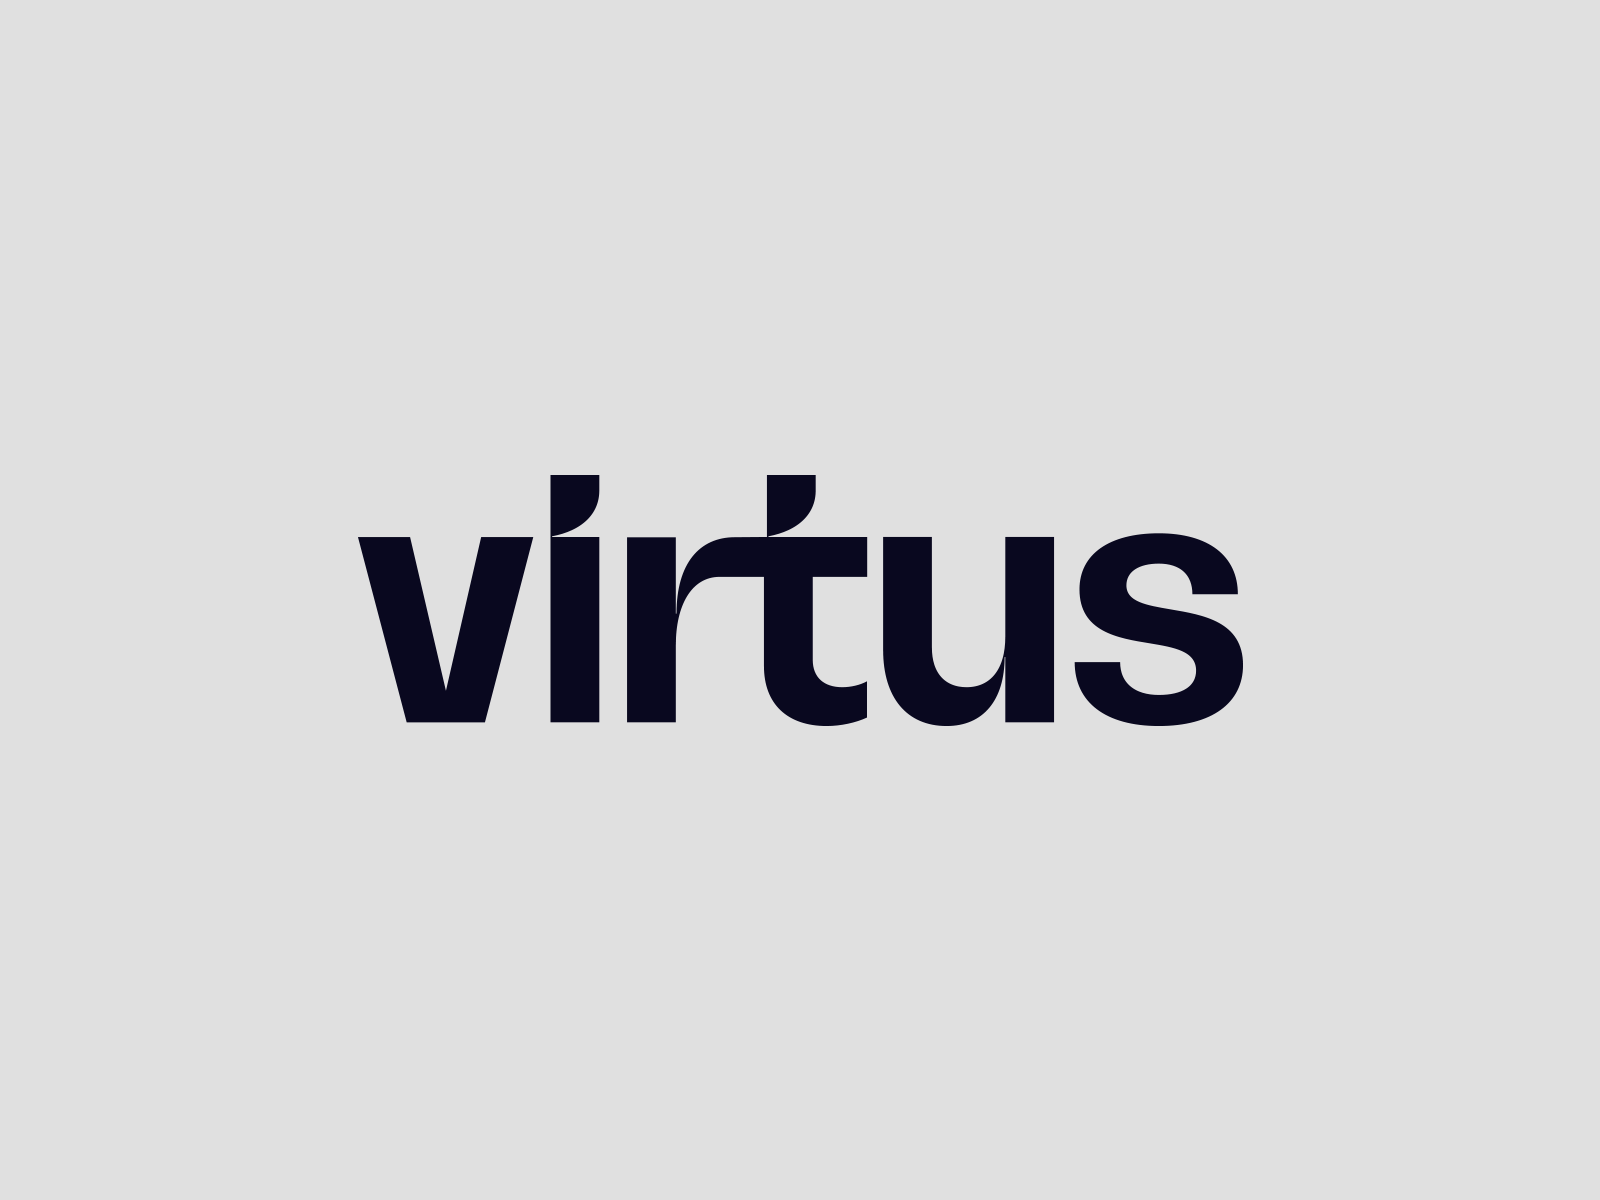 Virtusa - Wikipedia